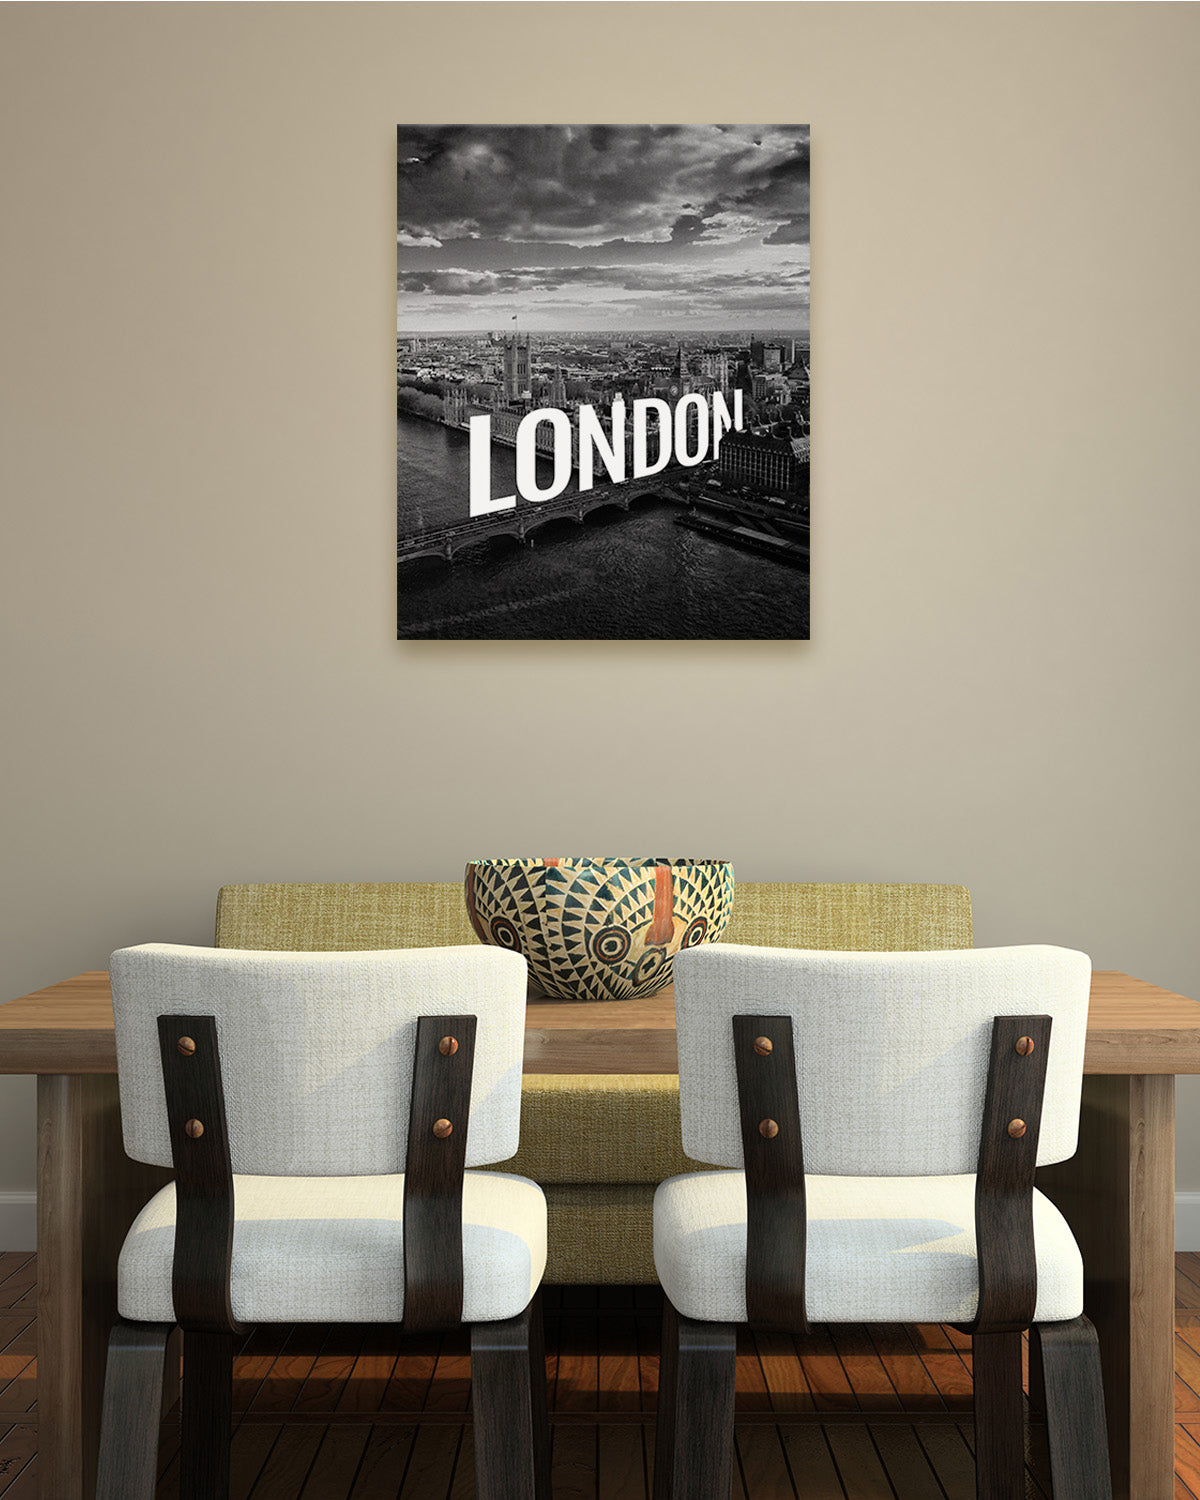 London Black and White Wall Art - England Room Decor - Cityscape Travel Destination Home Decor - Great Souvenir for Bathroom Decor